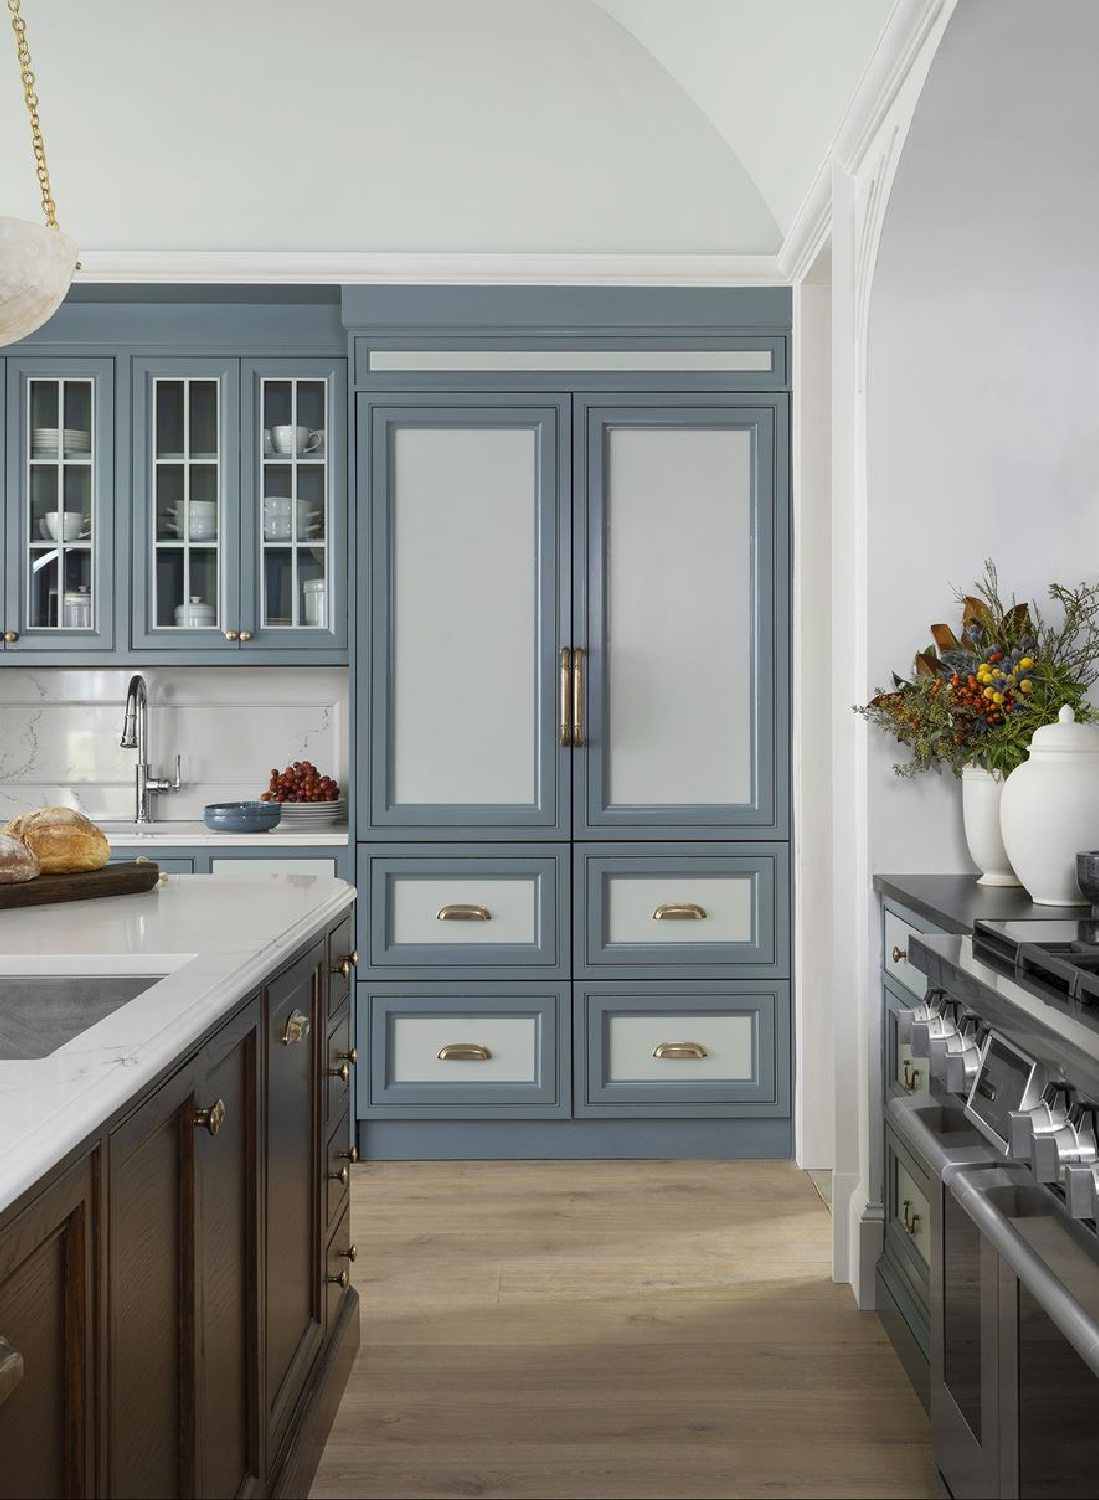 De Nimes 299 Farrow & Ball blue on a beautiful kitchen designed by Whittney Parkinson in House Beautiful (Robert Peterson photo). Builder: Ladisic Fine Homes. #denimes #farrowandballdenimes